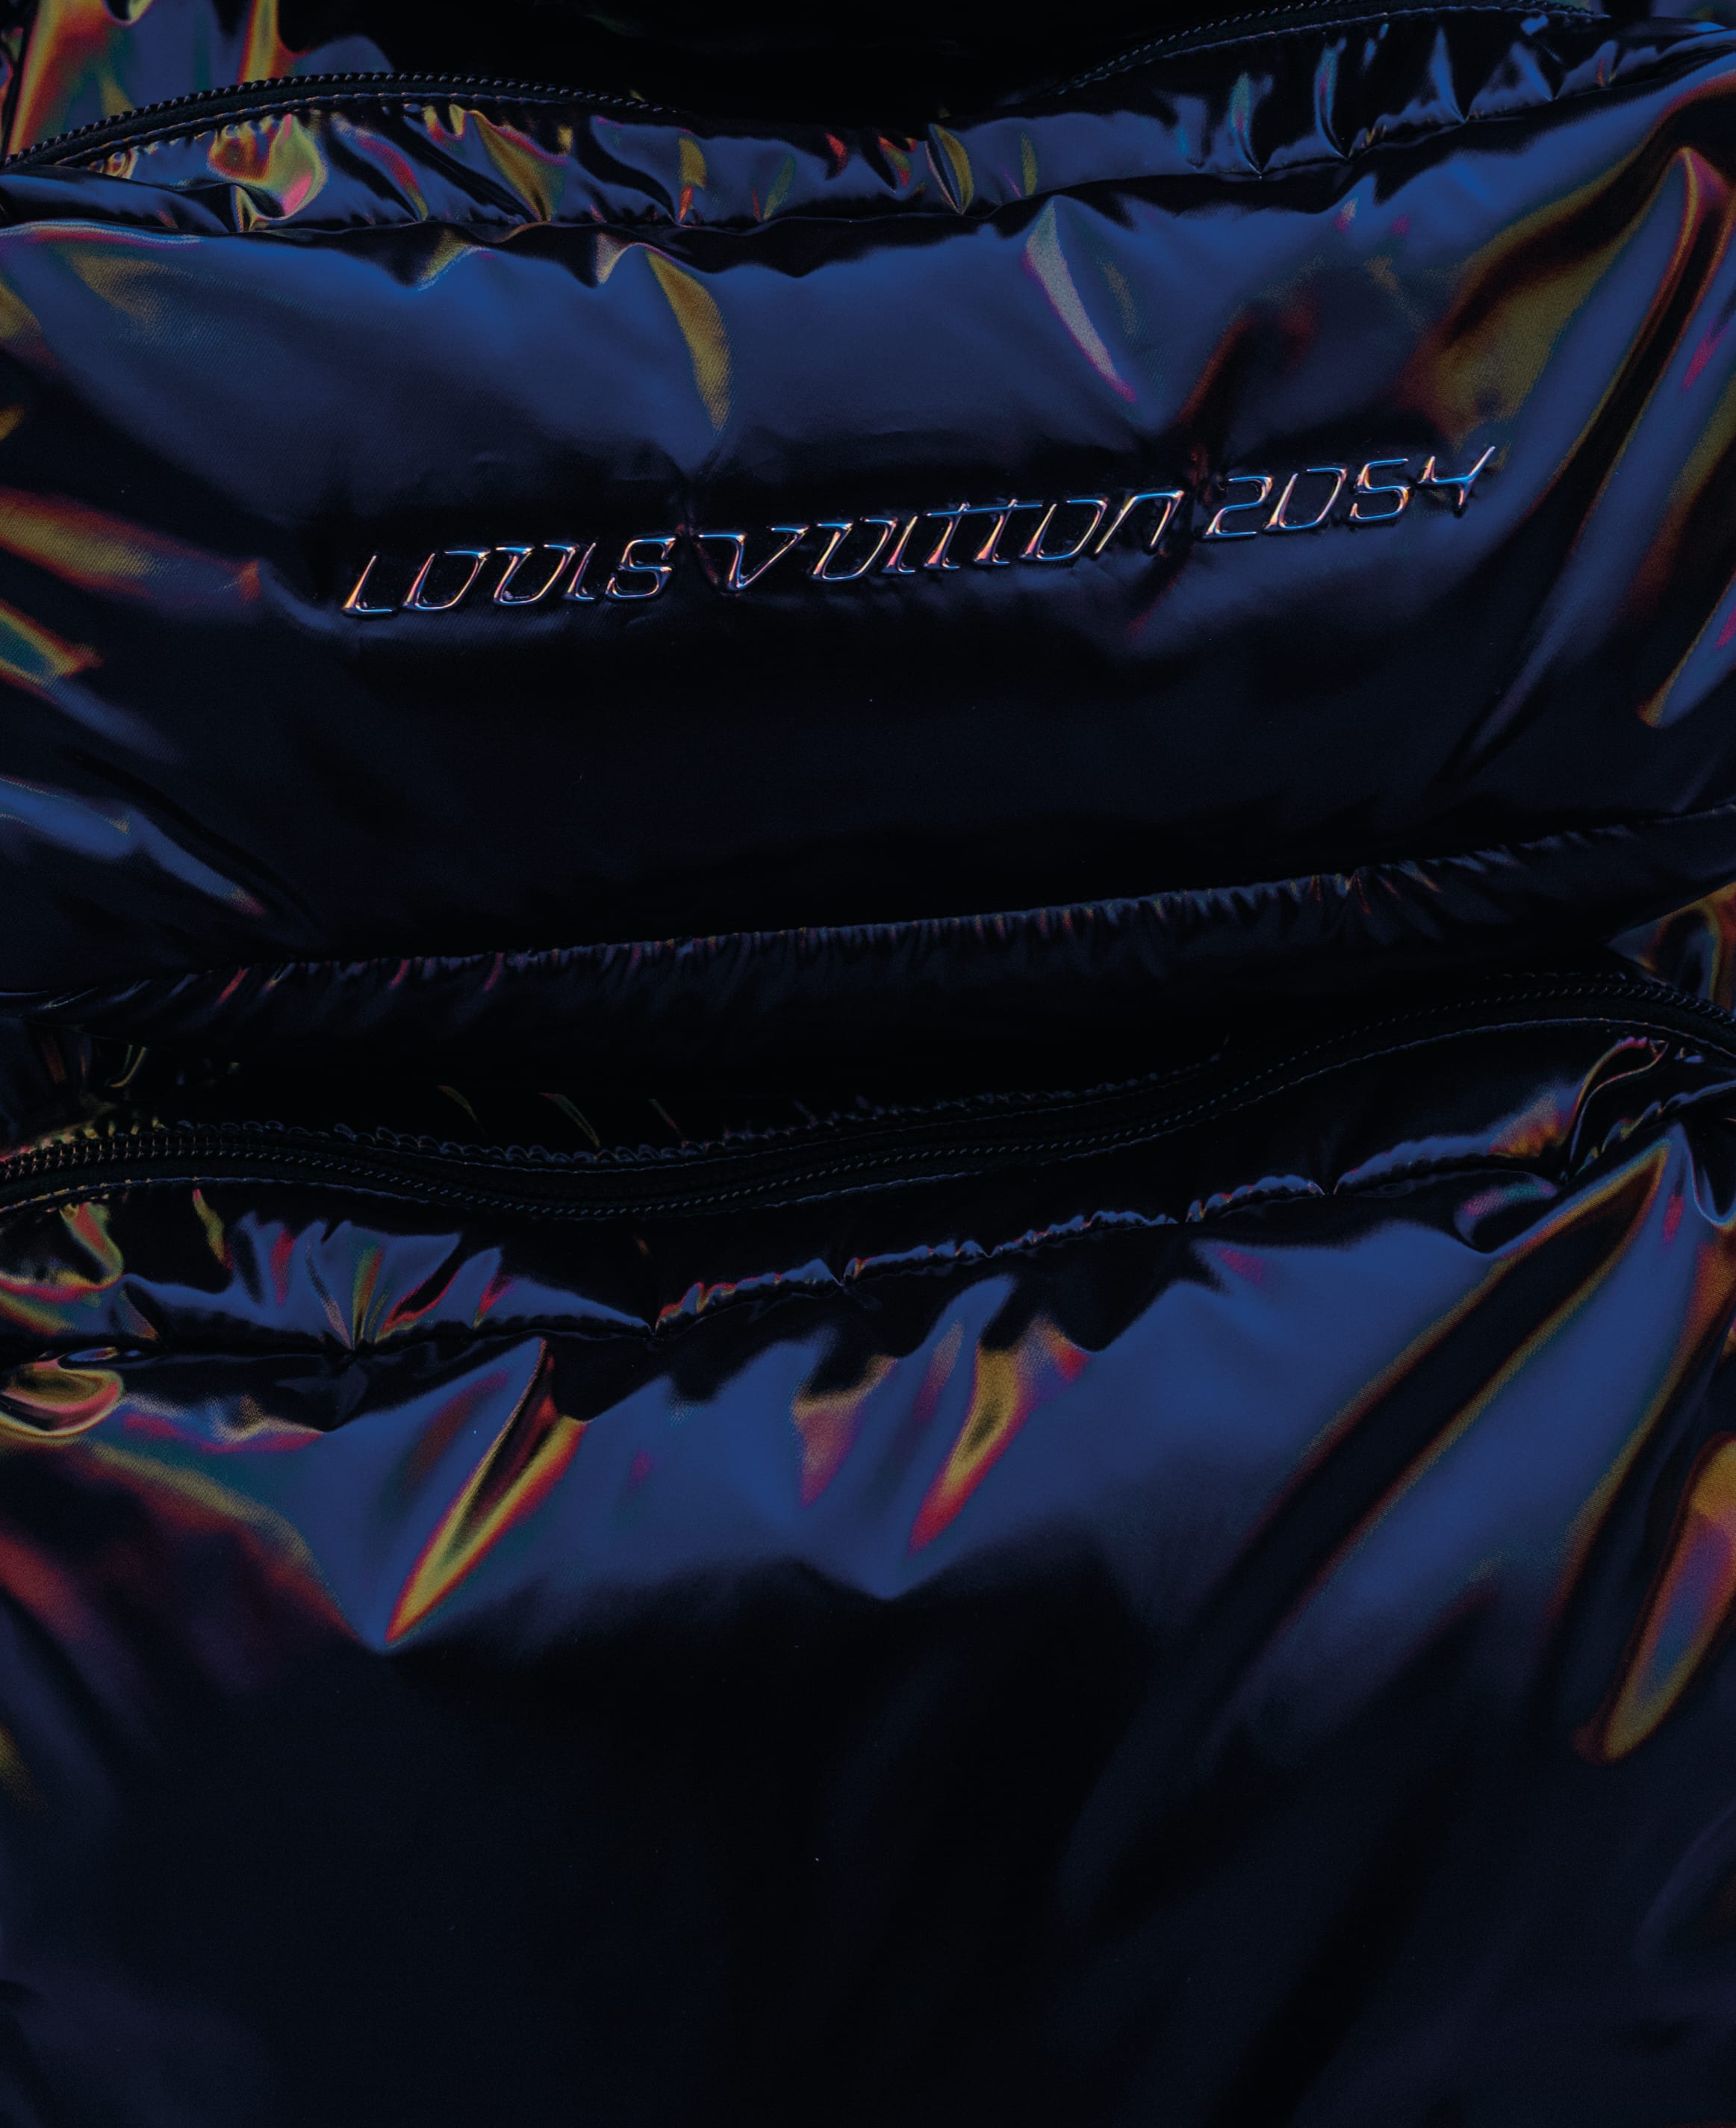 Louis Vuitton 2054 Grey Puffer Jacket